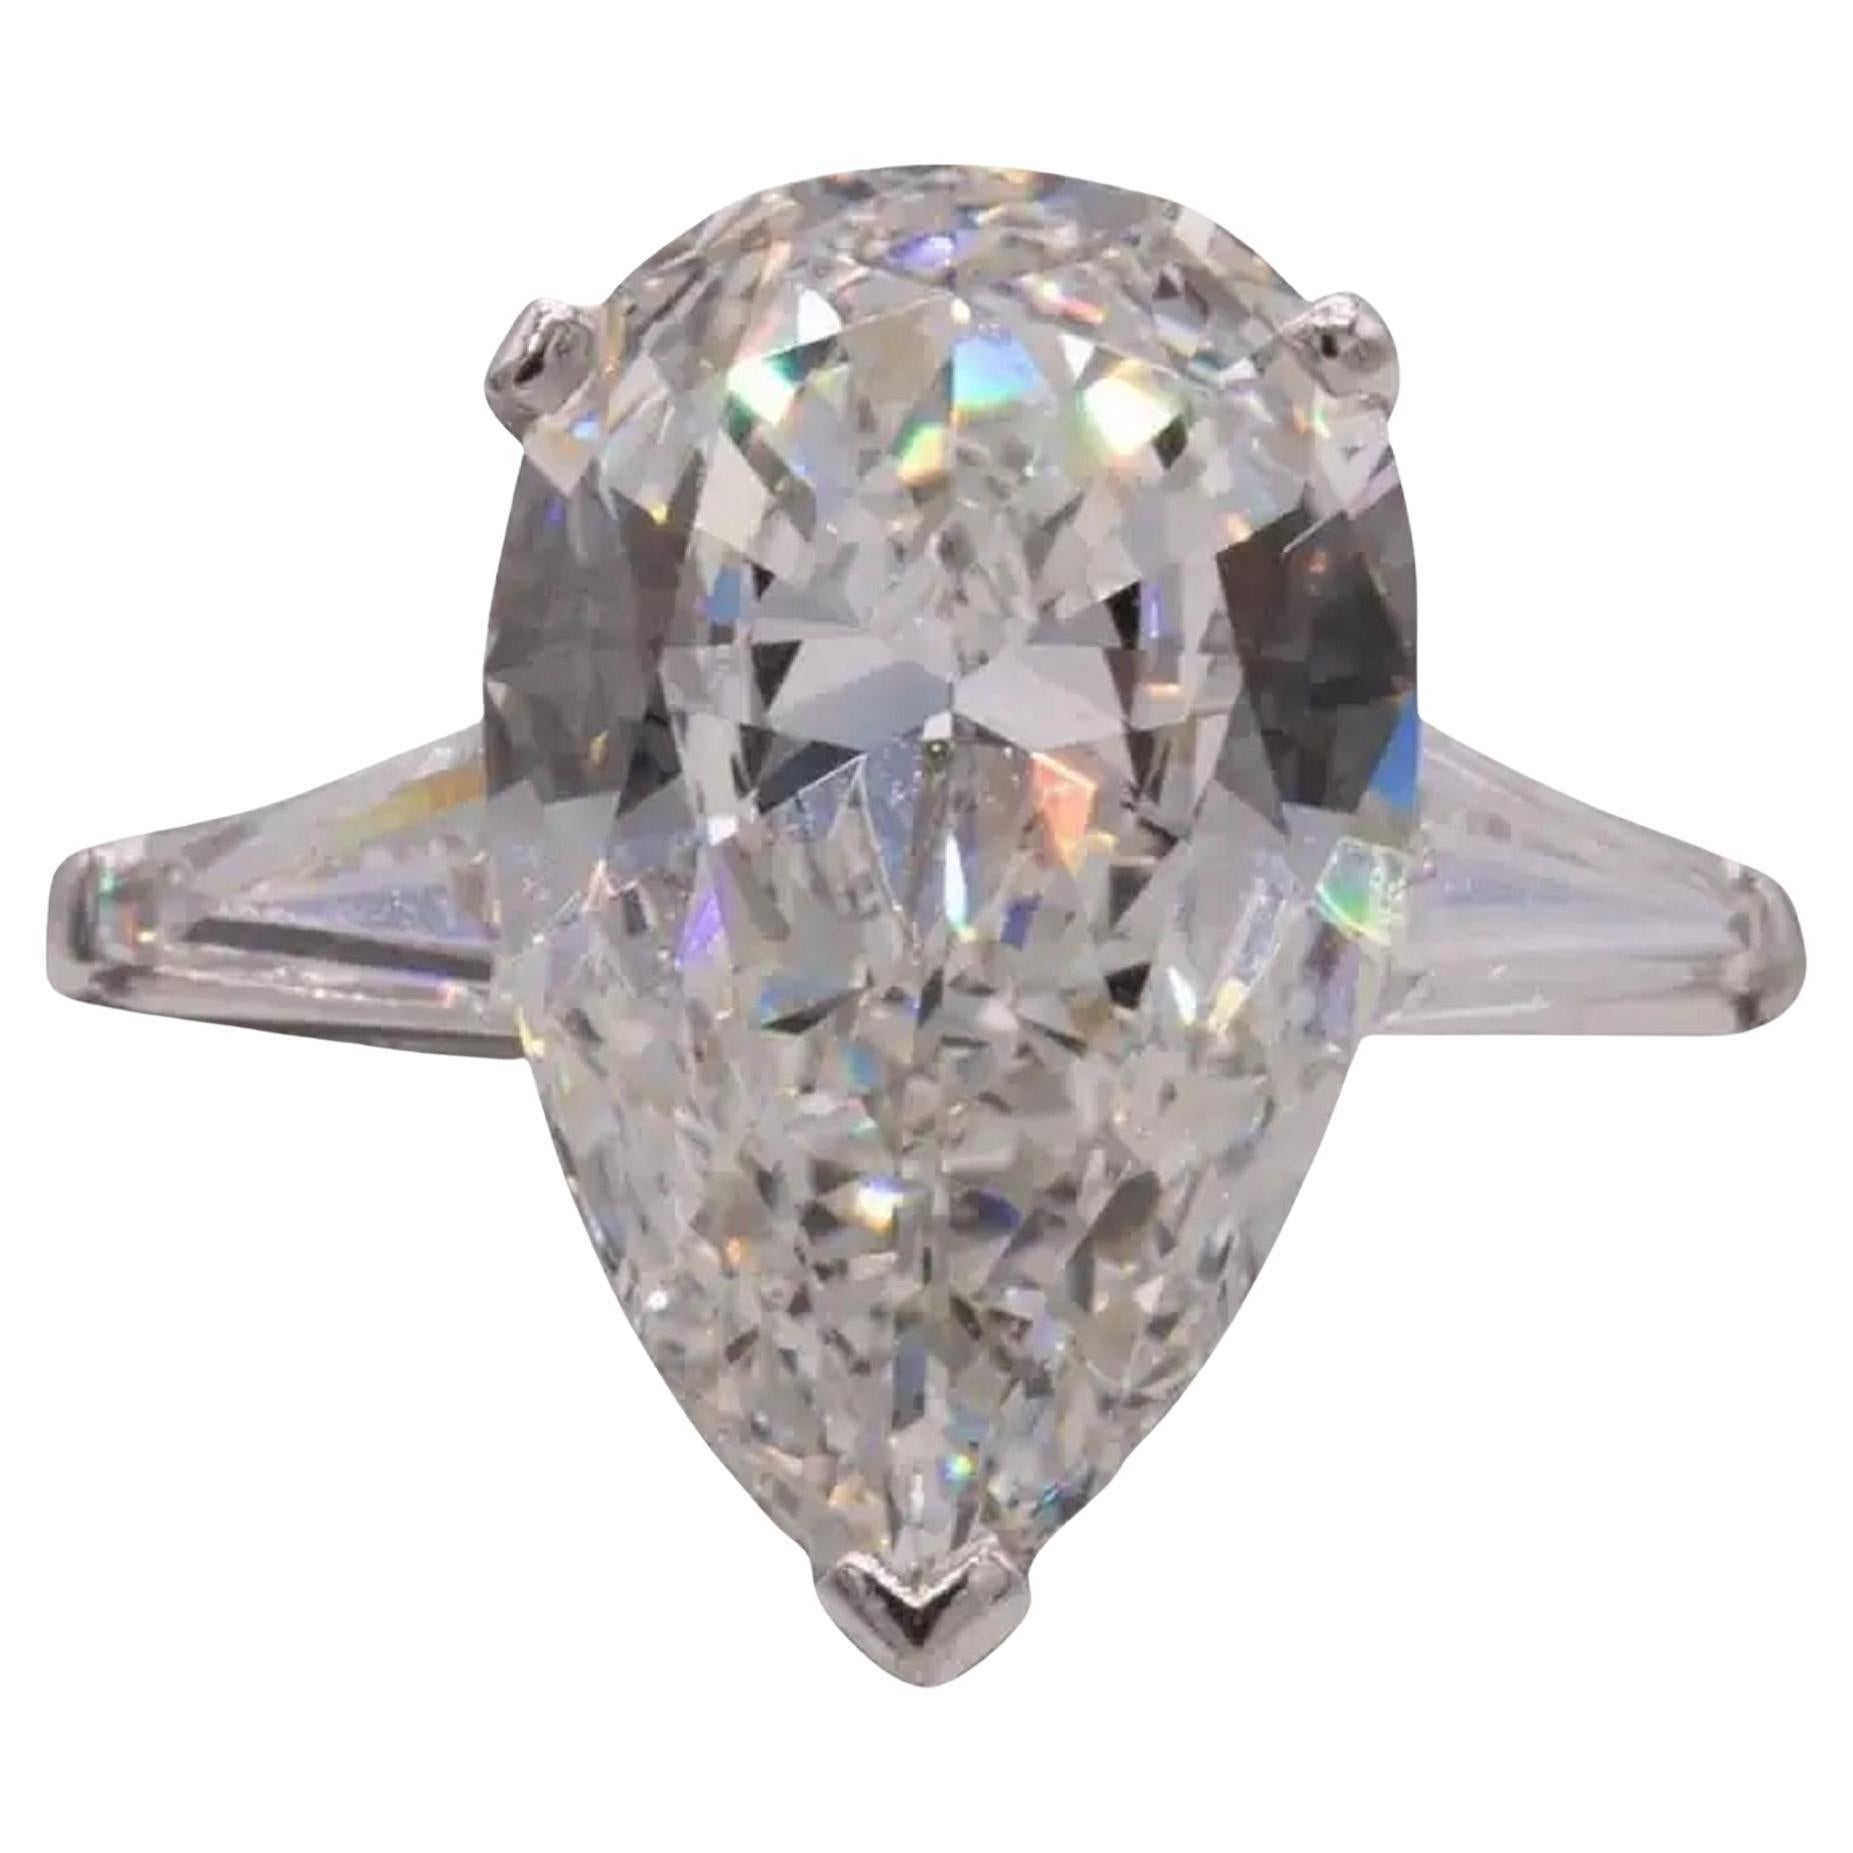 GIA Certified 6 Carat Pear Cut Diamond Ring